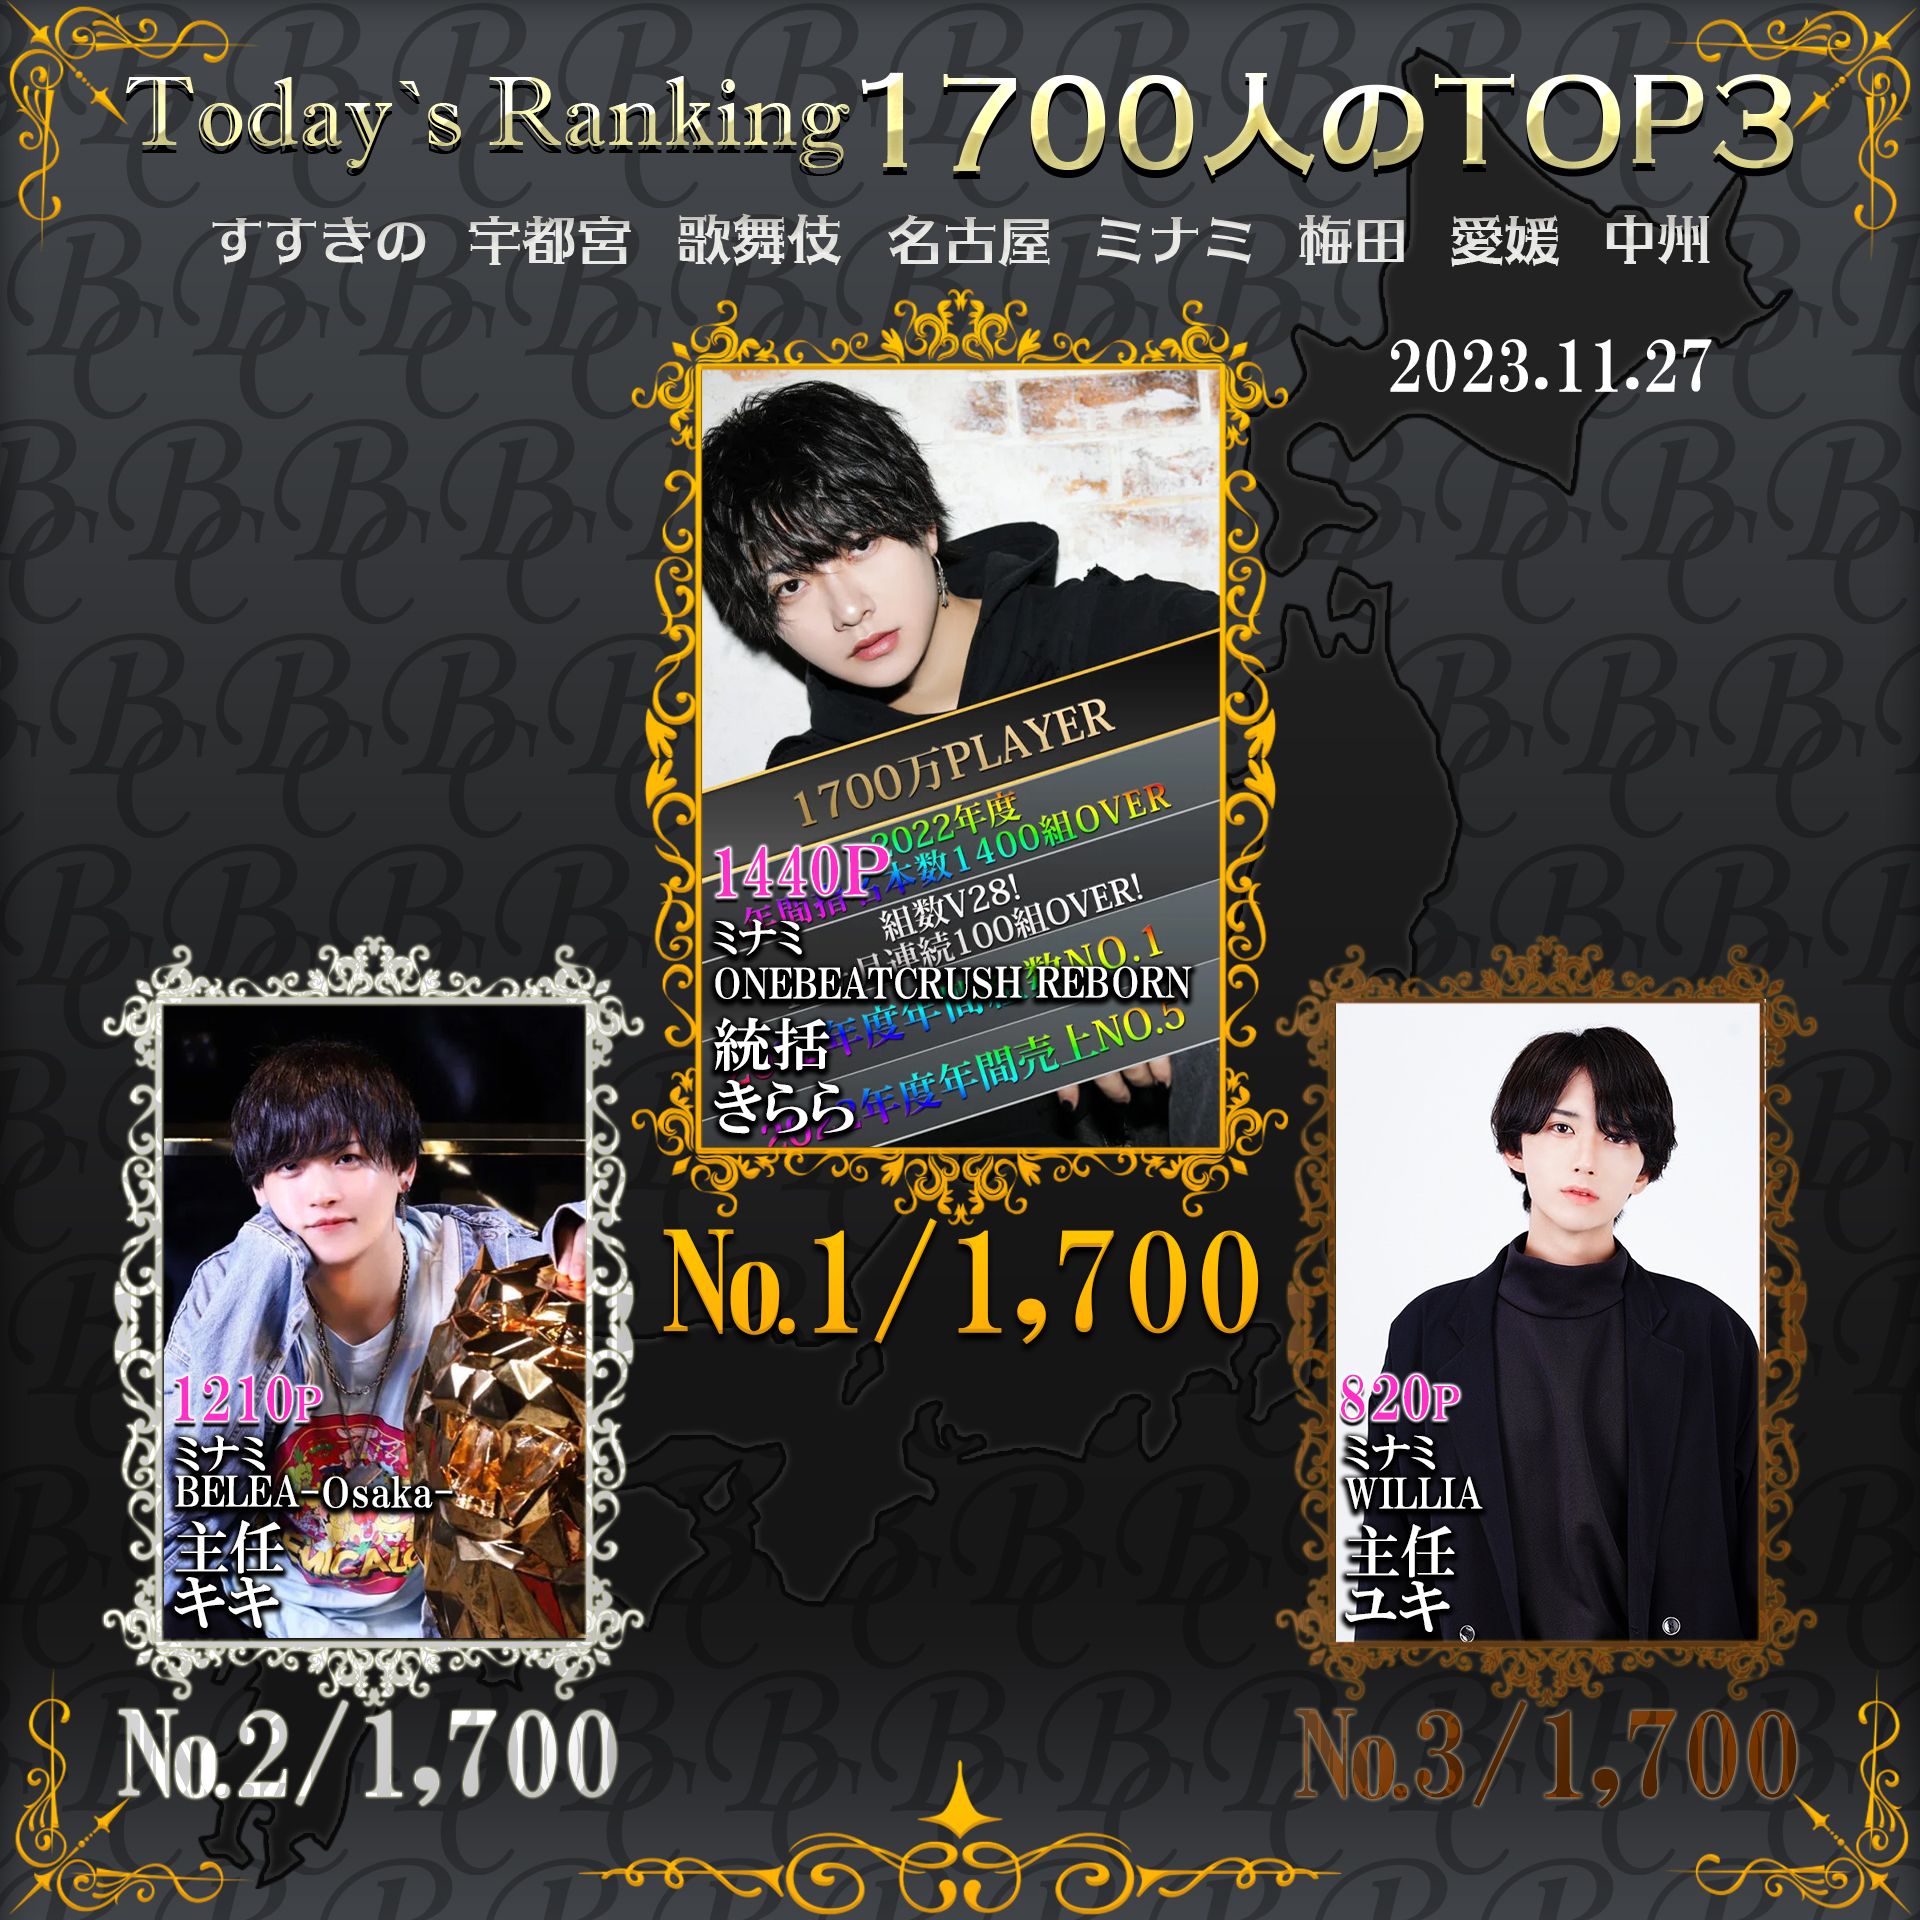 11/27 Today’s Ranking